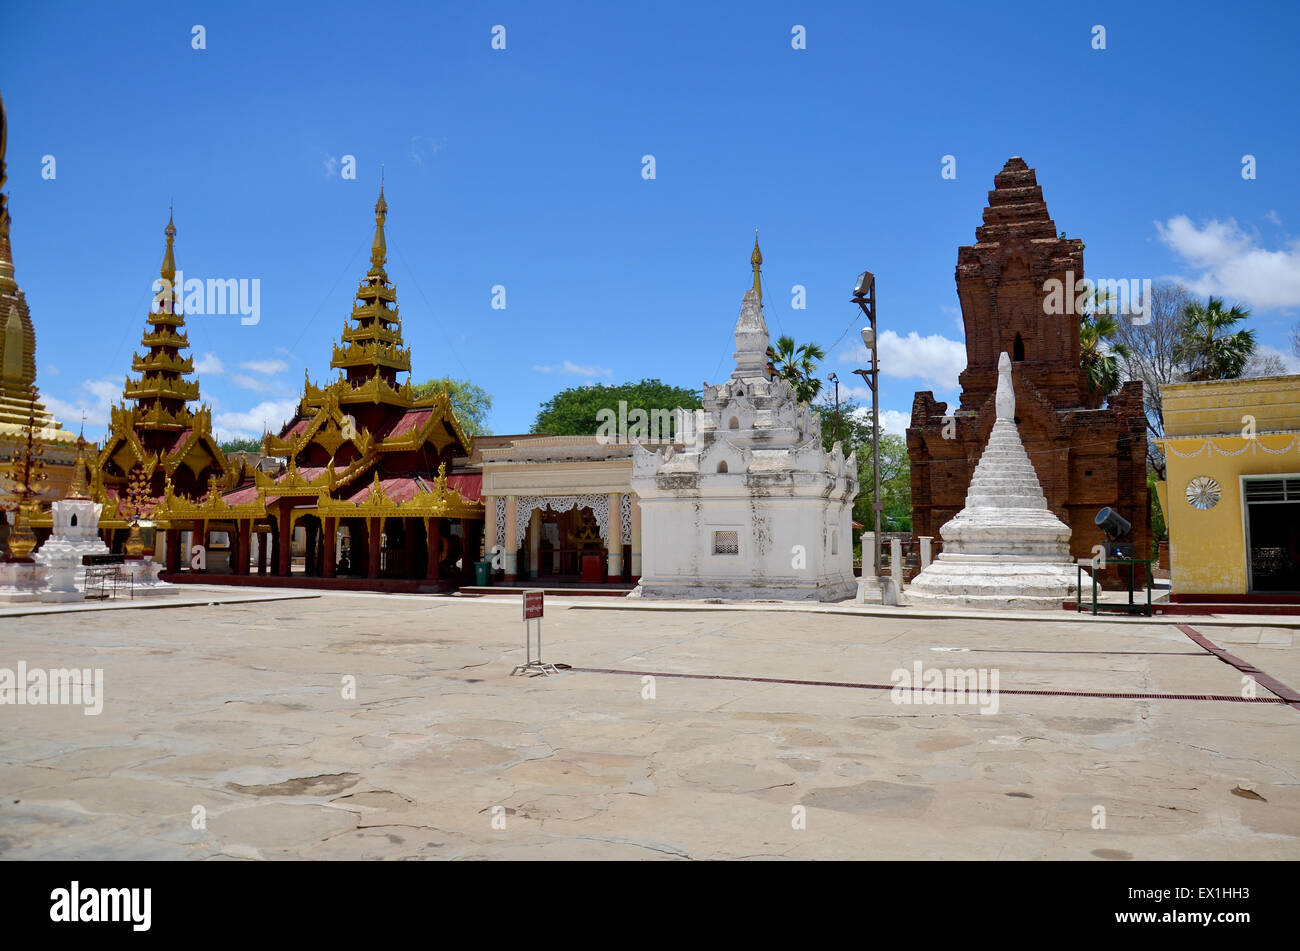 The golden Shwezigon Pagoda or Shwezigon Paya is a Buddhist temple located in Nyaung-U, a town near Bagan, in Burma (Myanmar). Stock Photo